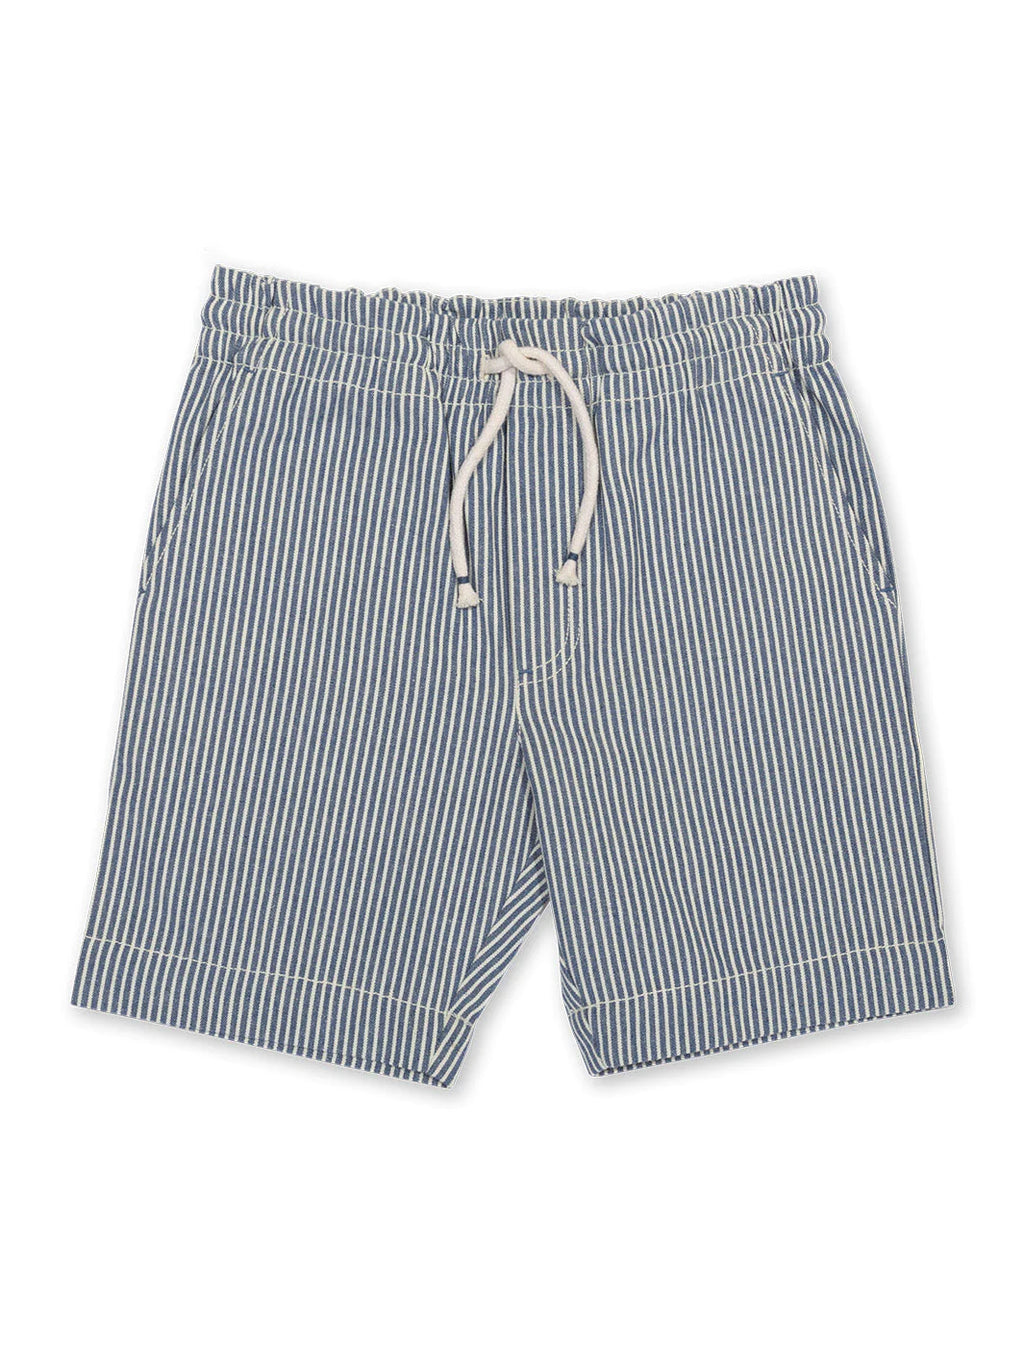 Kite Clothing Boys Smart Navy Striped Ticking Shorts | New Season | SALE